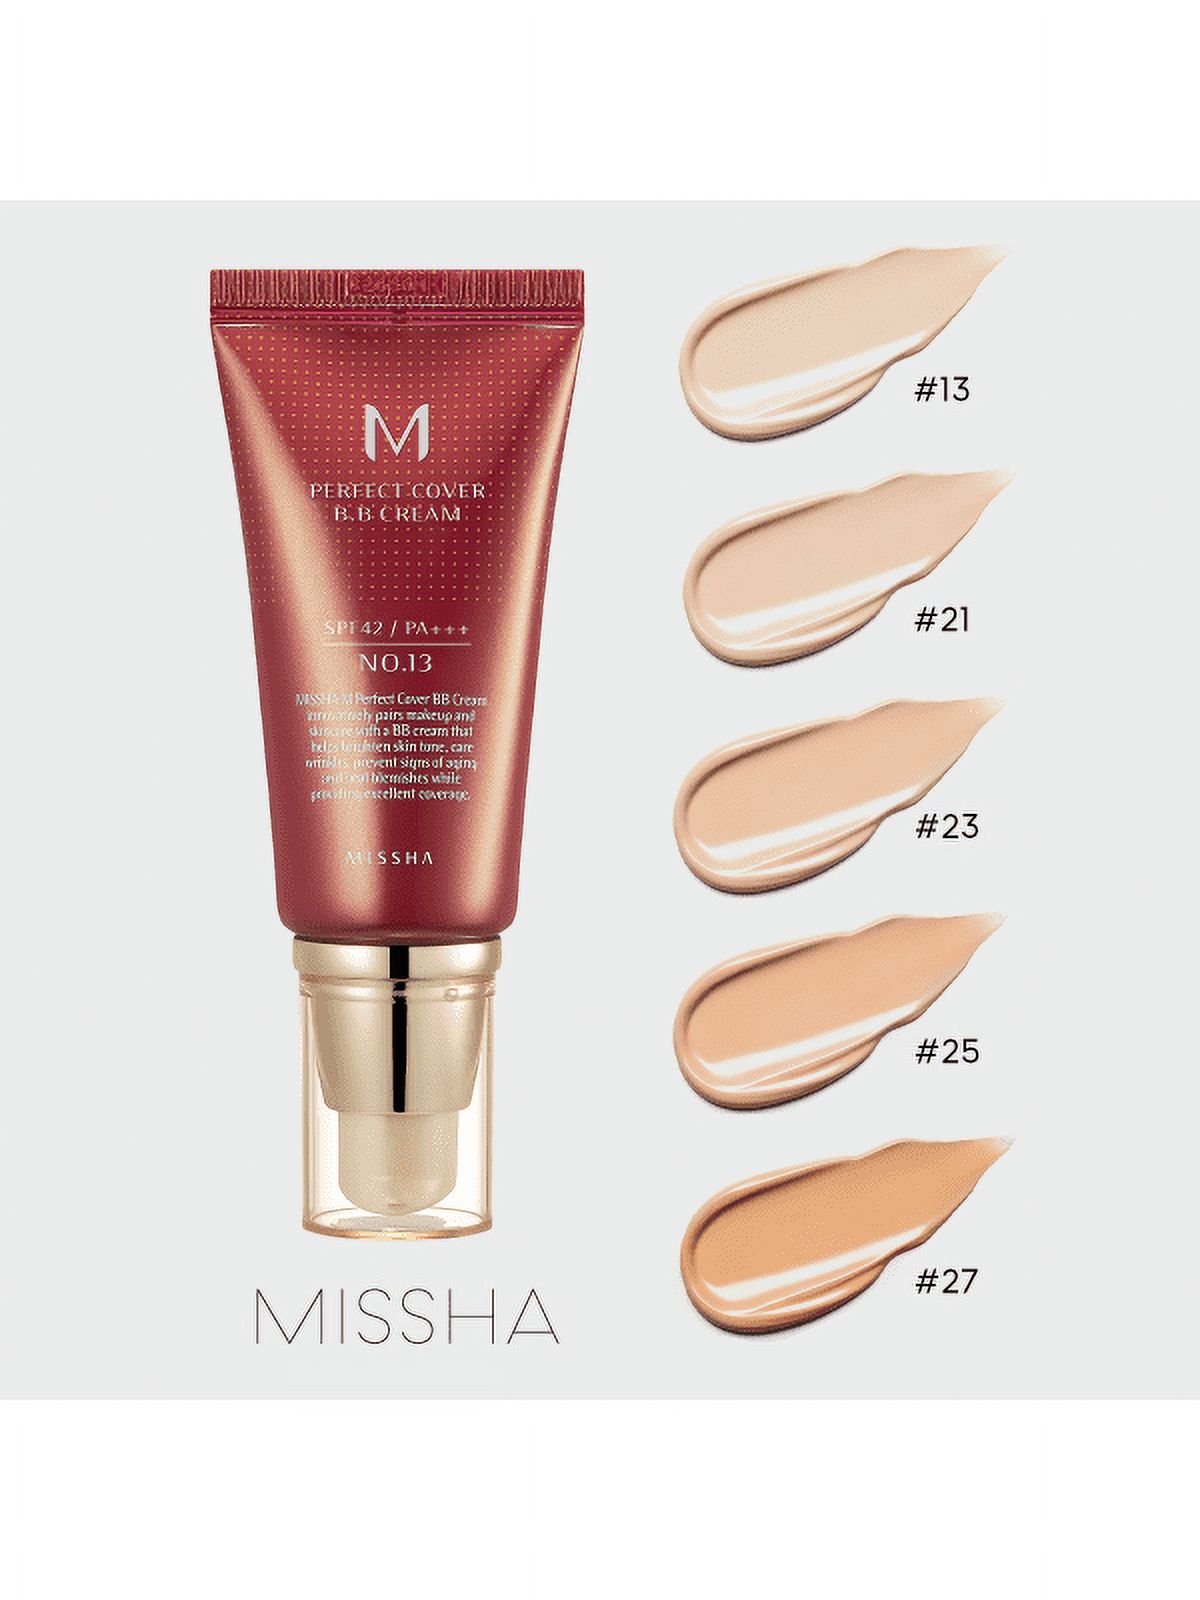 Missha M Perfect Cover BB Cream SPF42, PA #23 - Natural Beige, 1.69 fl oz - image 2 of 6